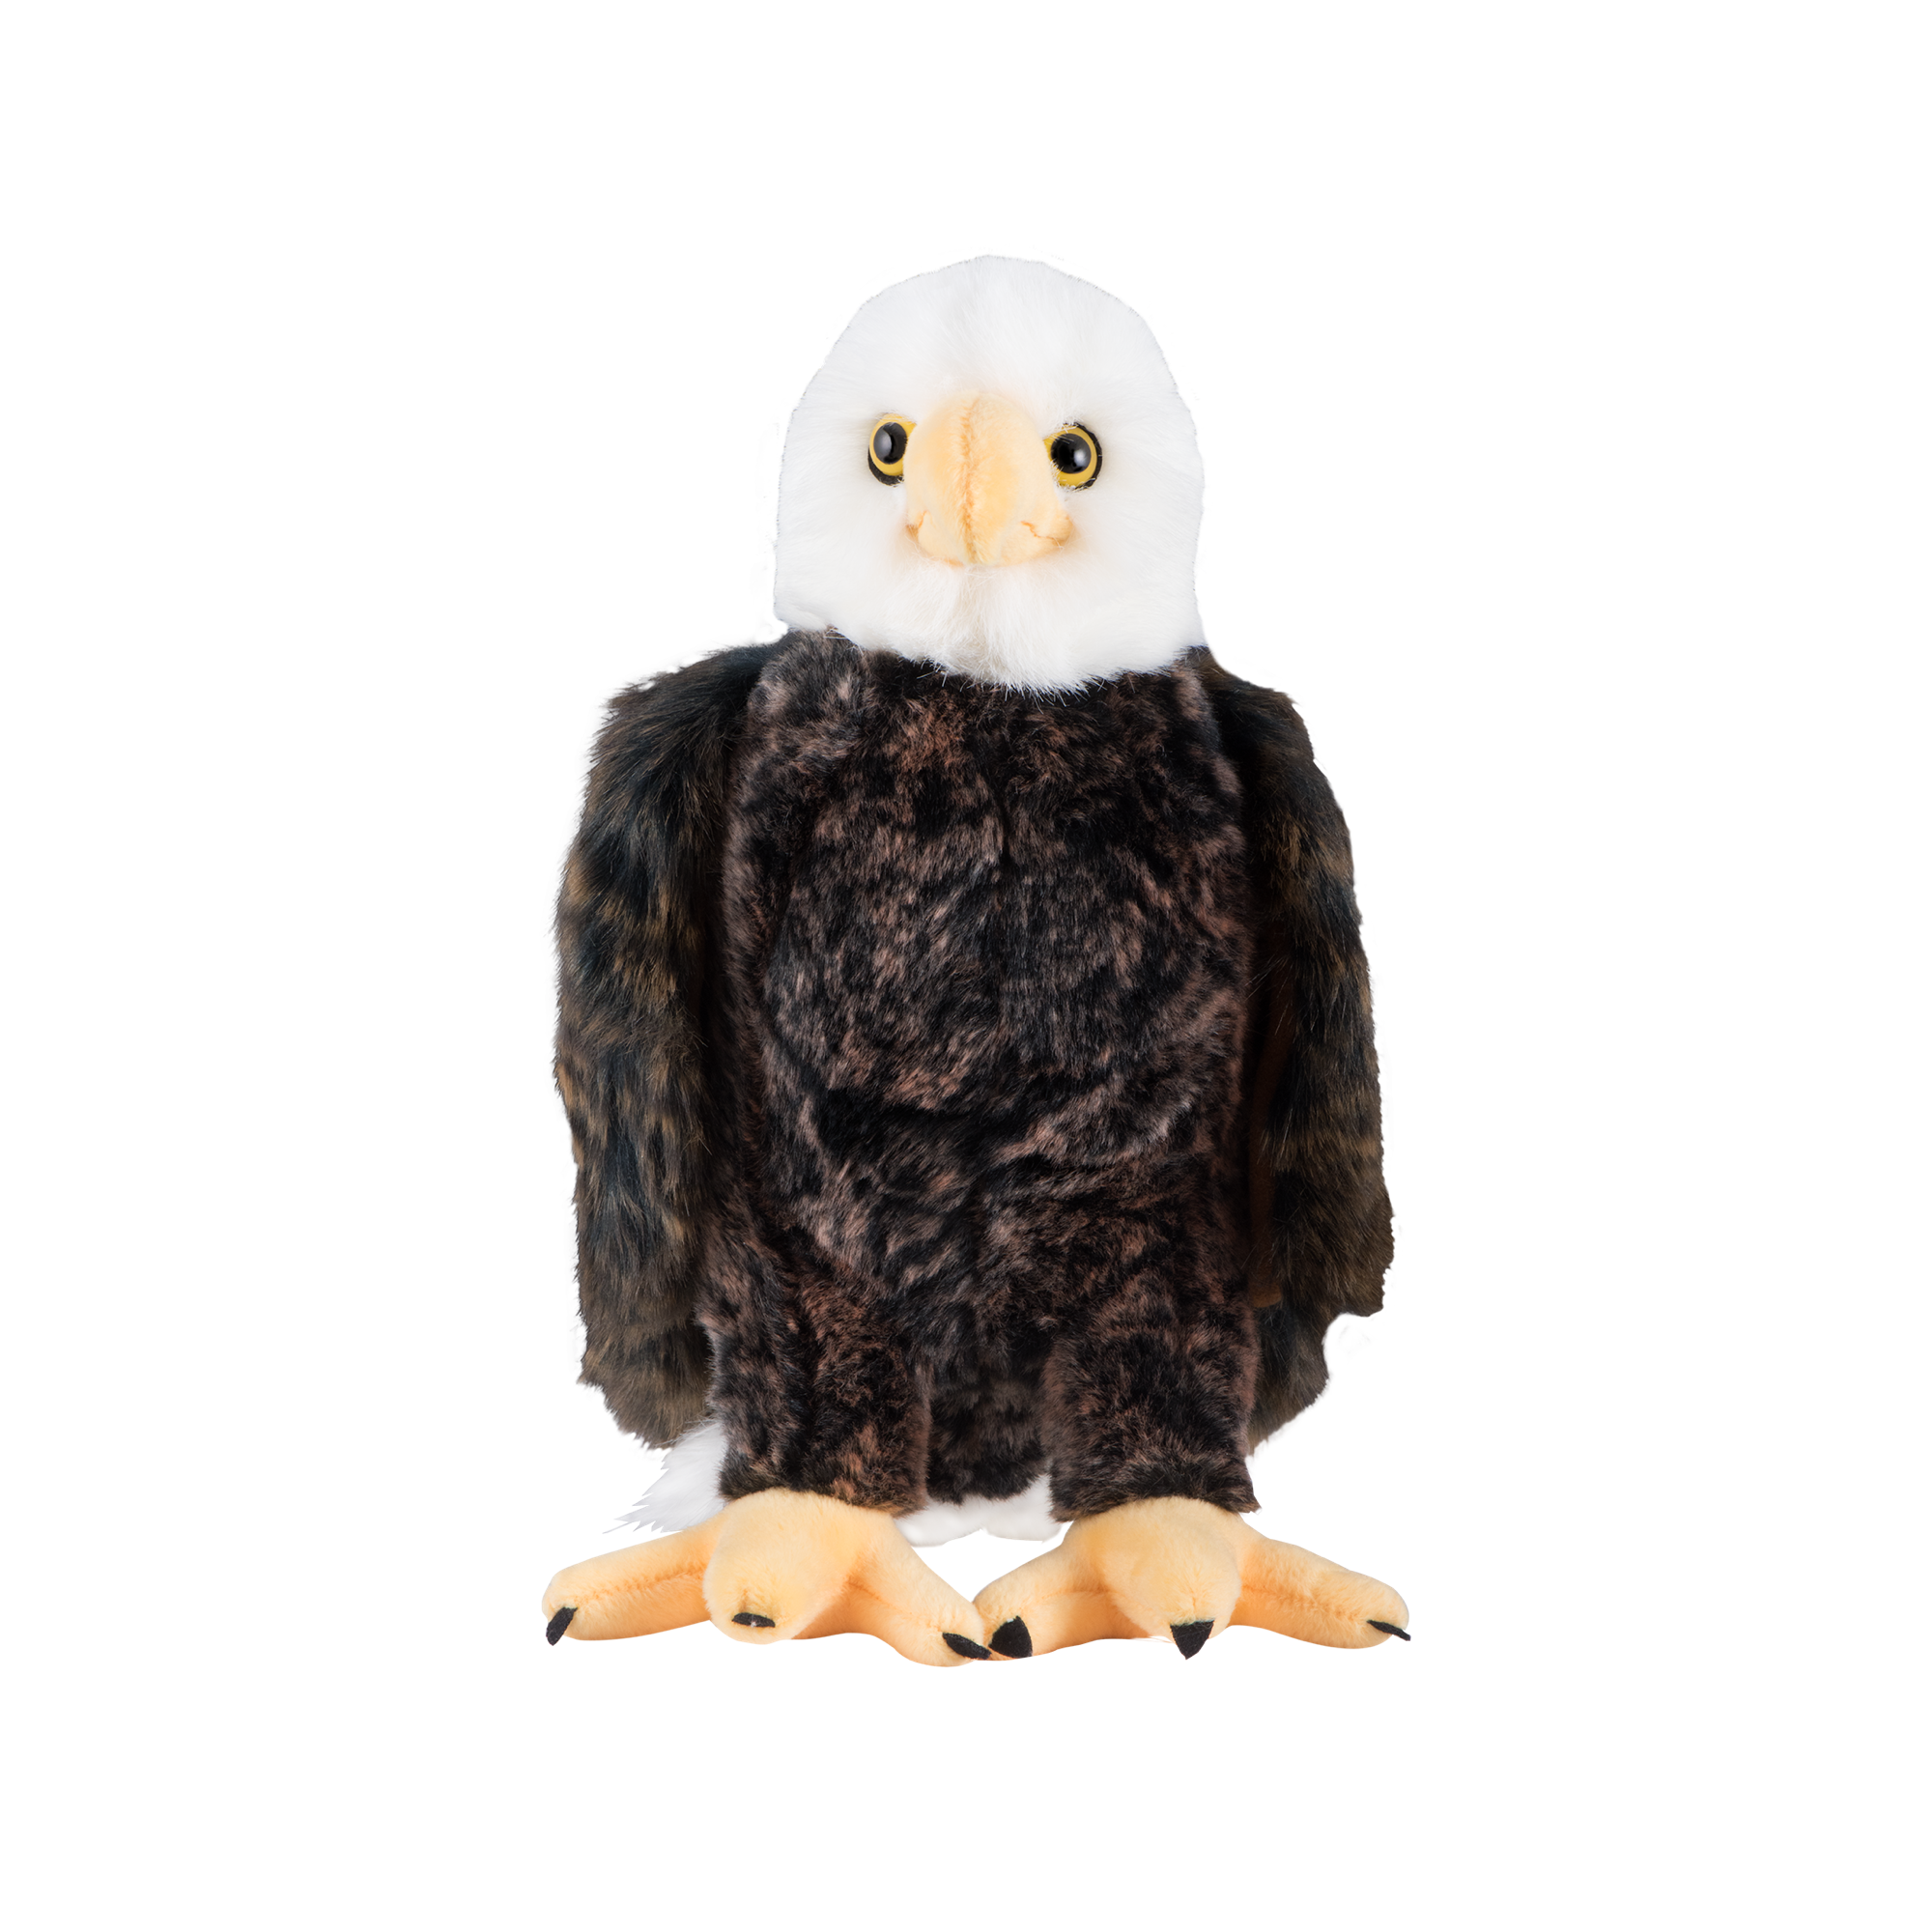 eagle plush toy